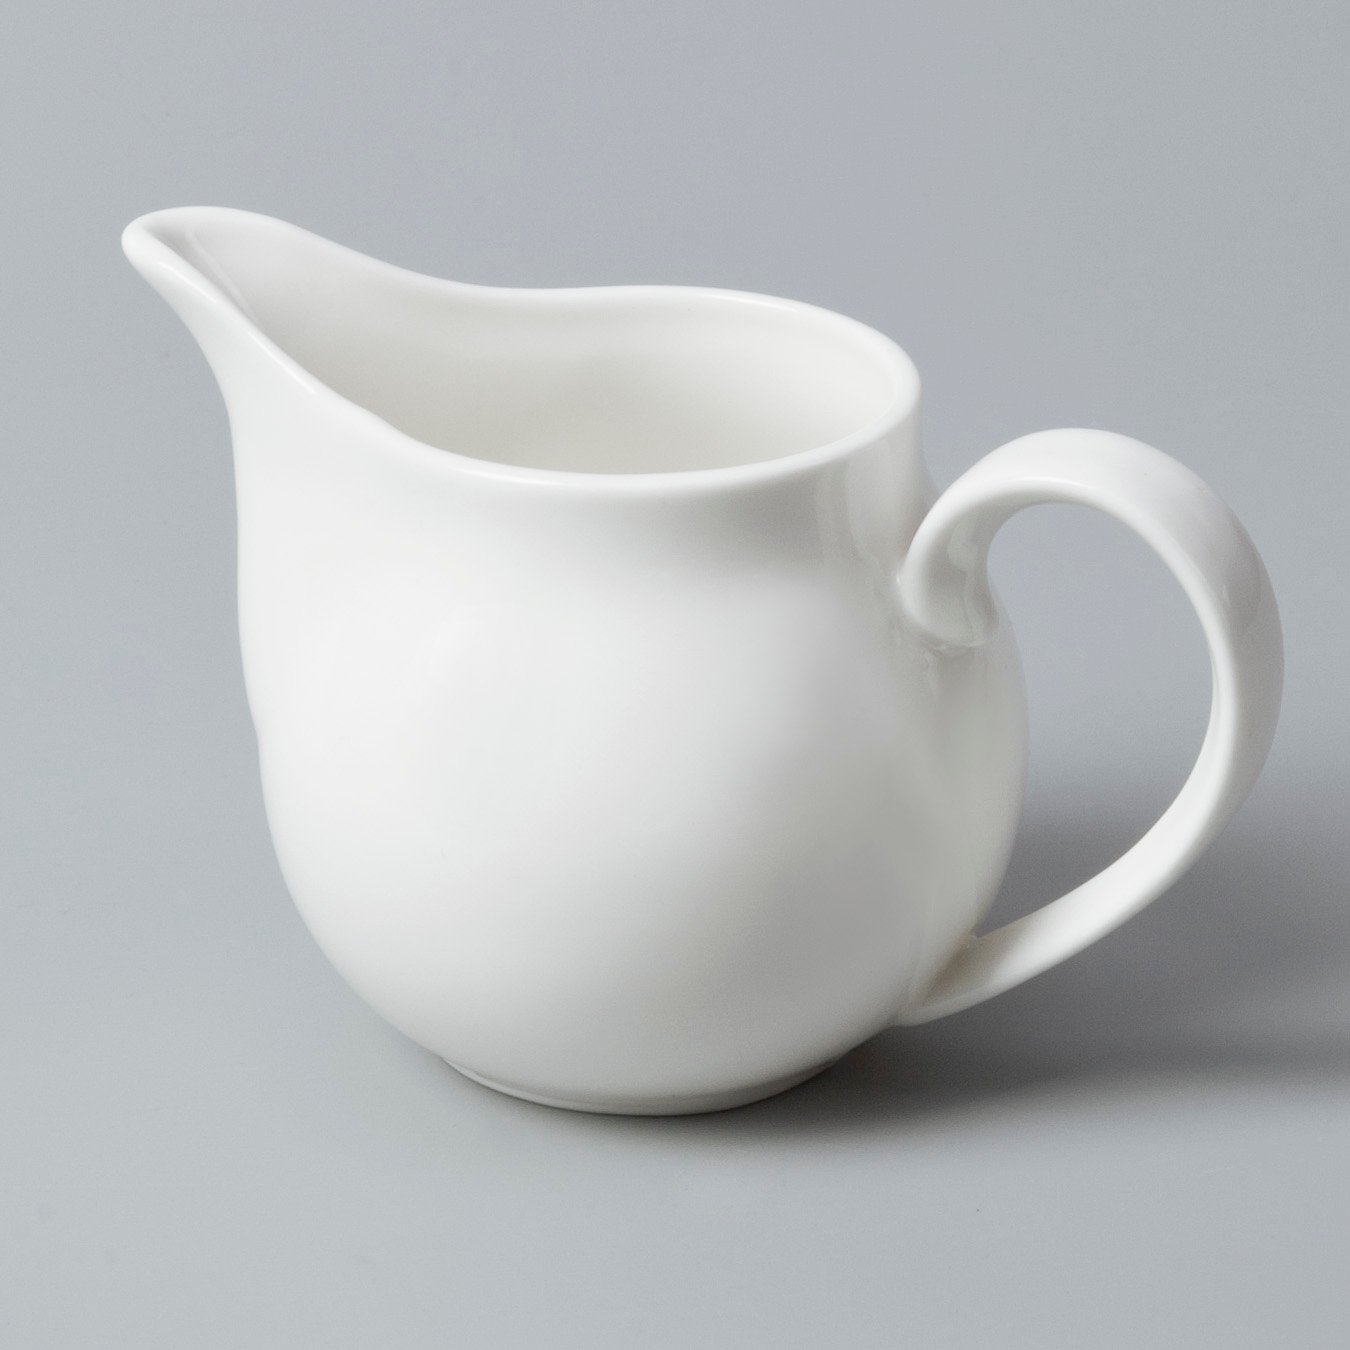 glaze best porcelain dinnerware in the world Italian style manufacturerfor home-9